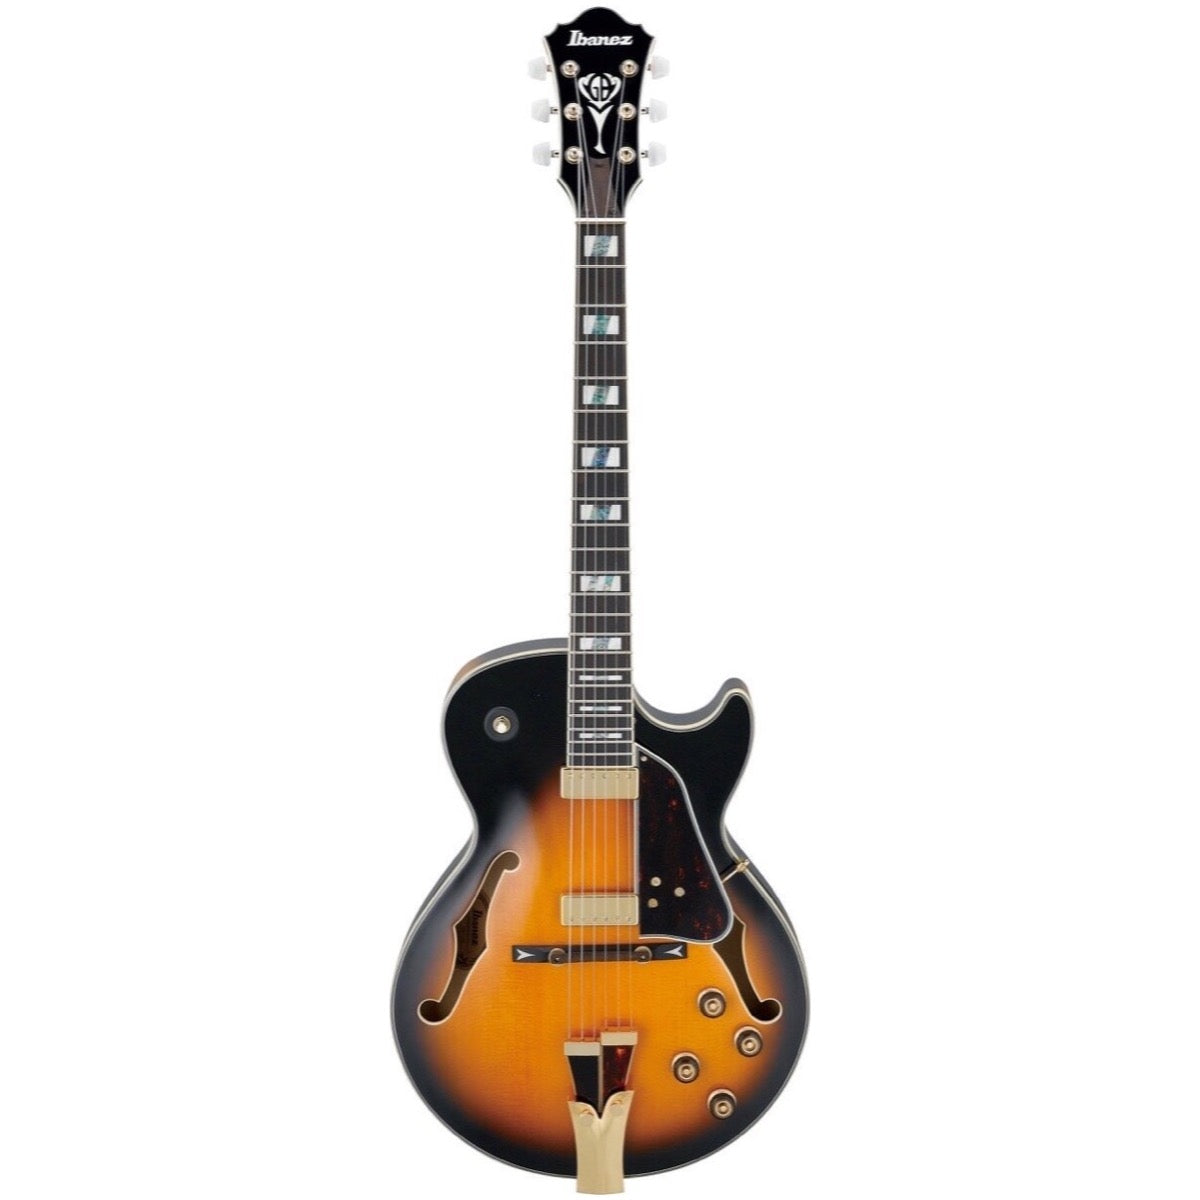 Ibanez GB10SE George Benson Electric Guitar (with Case), Brown Sunburst